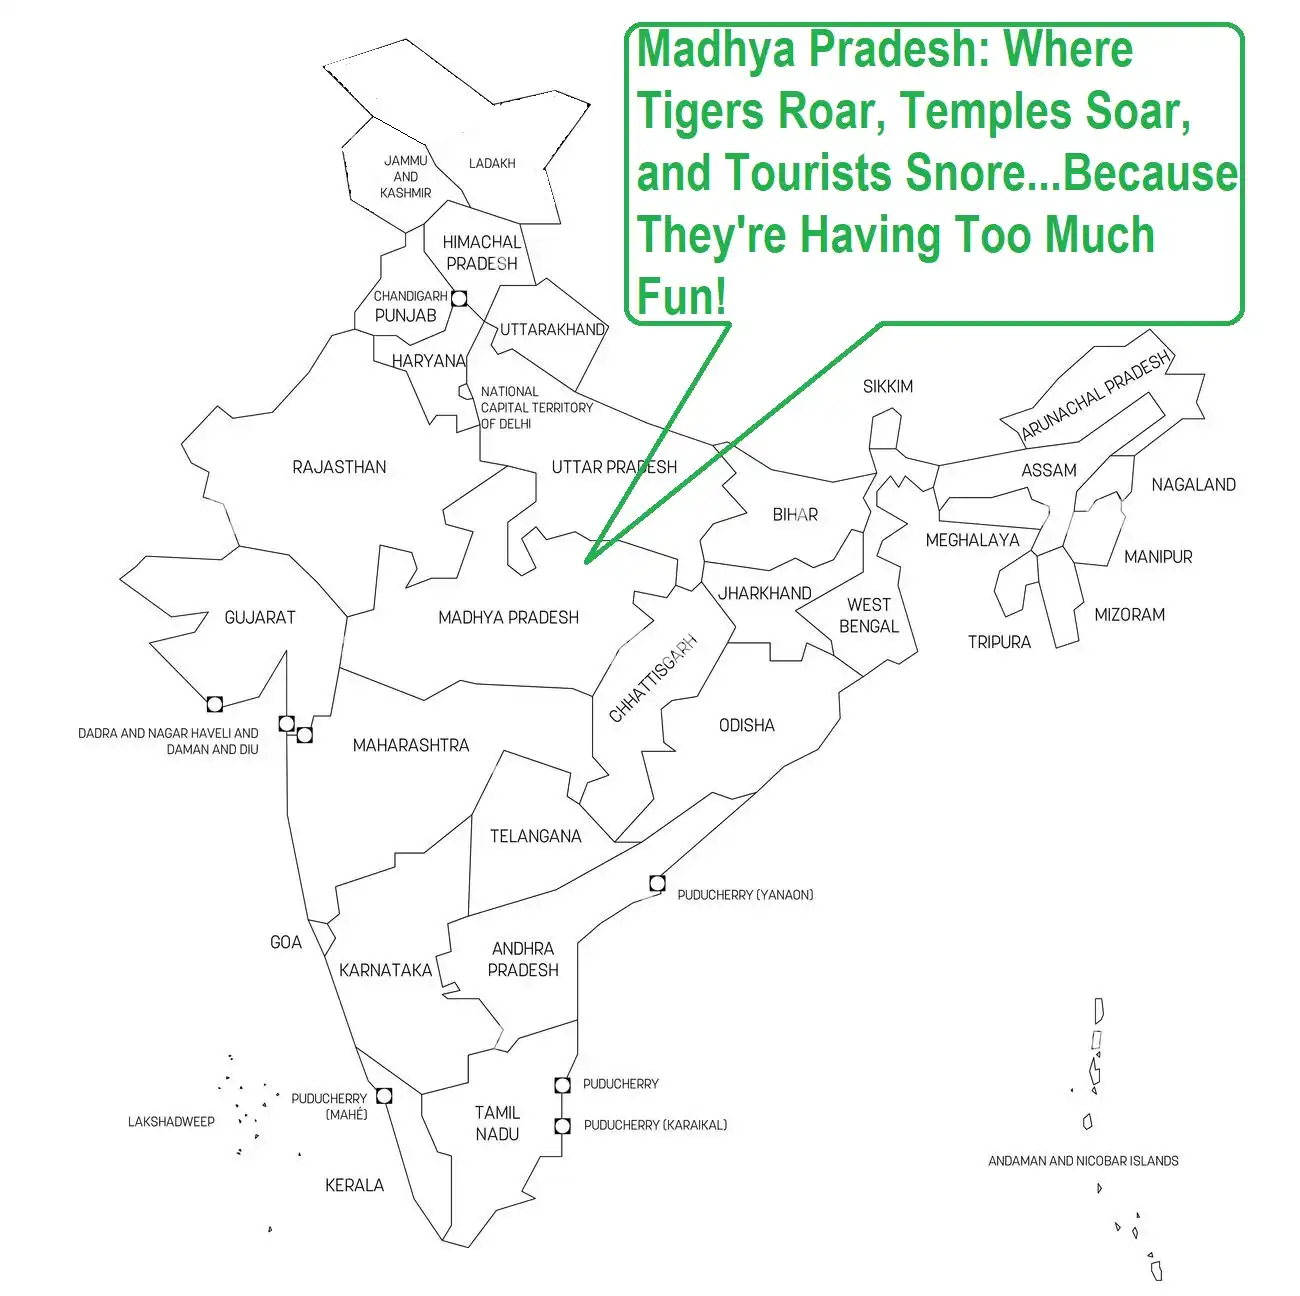 Madhya Pradesh: The Heart of Incredible India